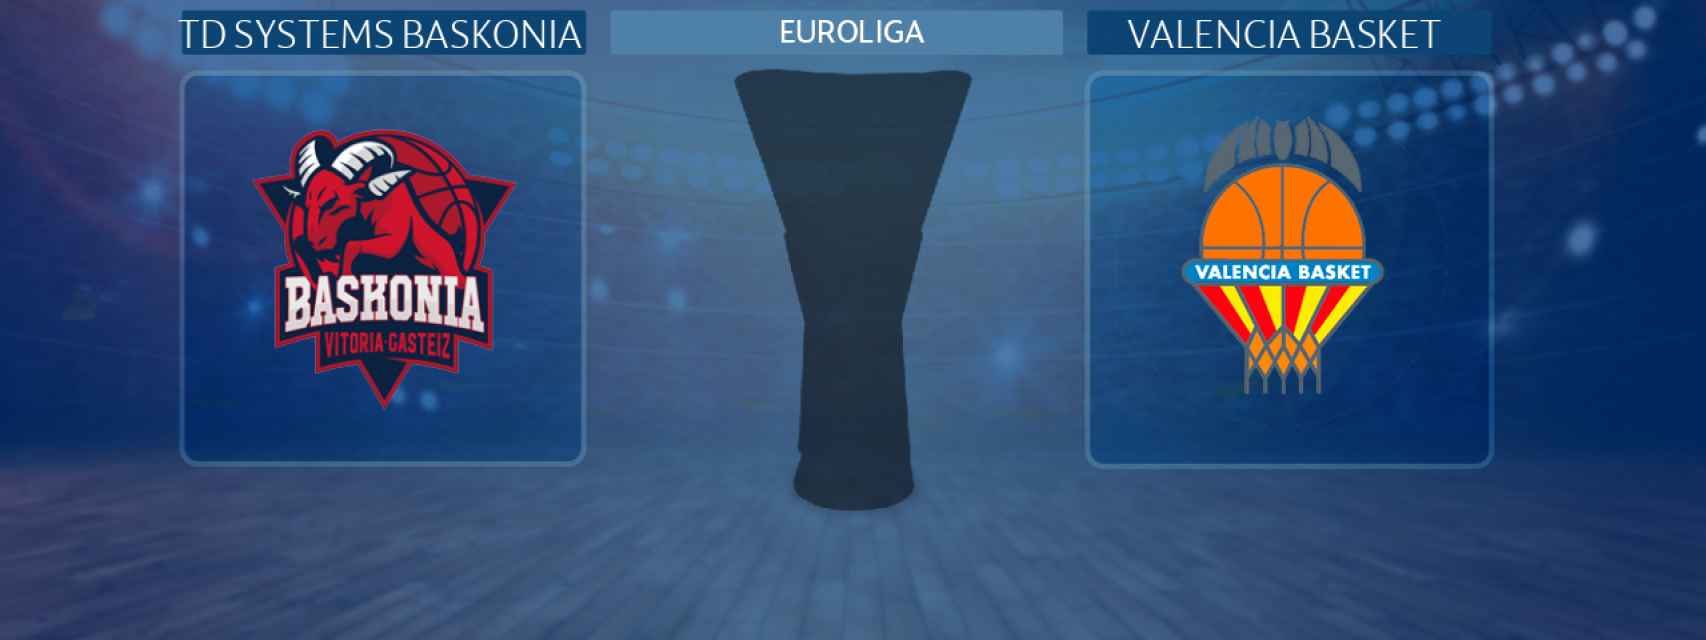 TD Systems Baskonia - Valencia Basket, partido de la Euroliga